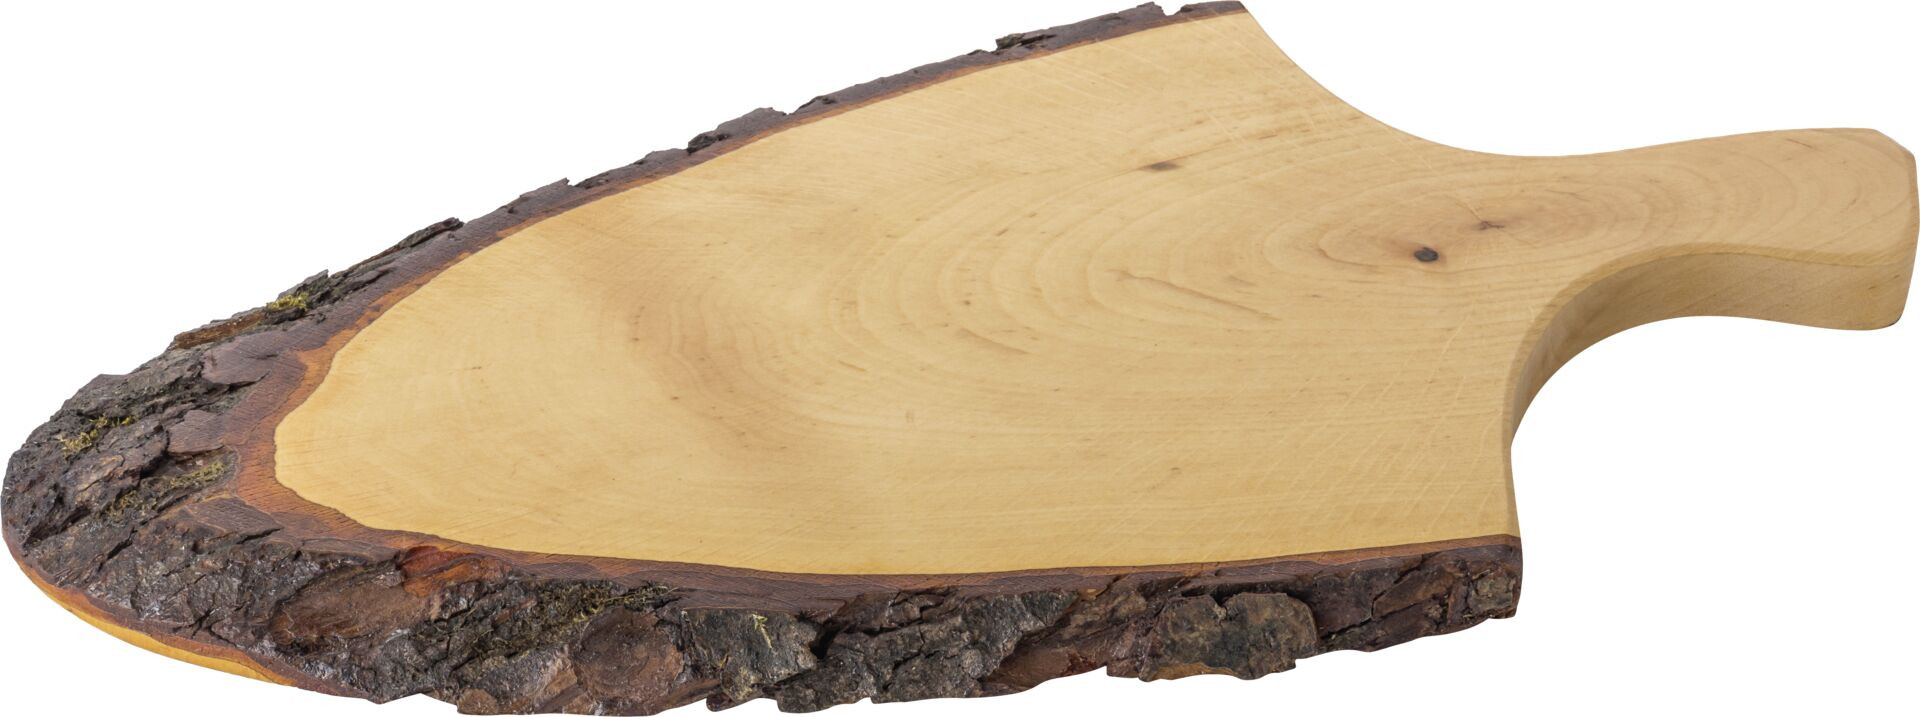 Rindenholzbrett mit Griff 38 x 17 cm